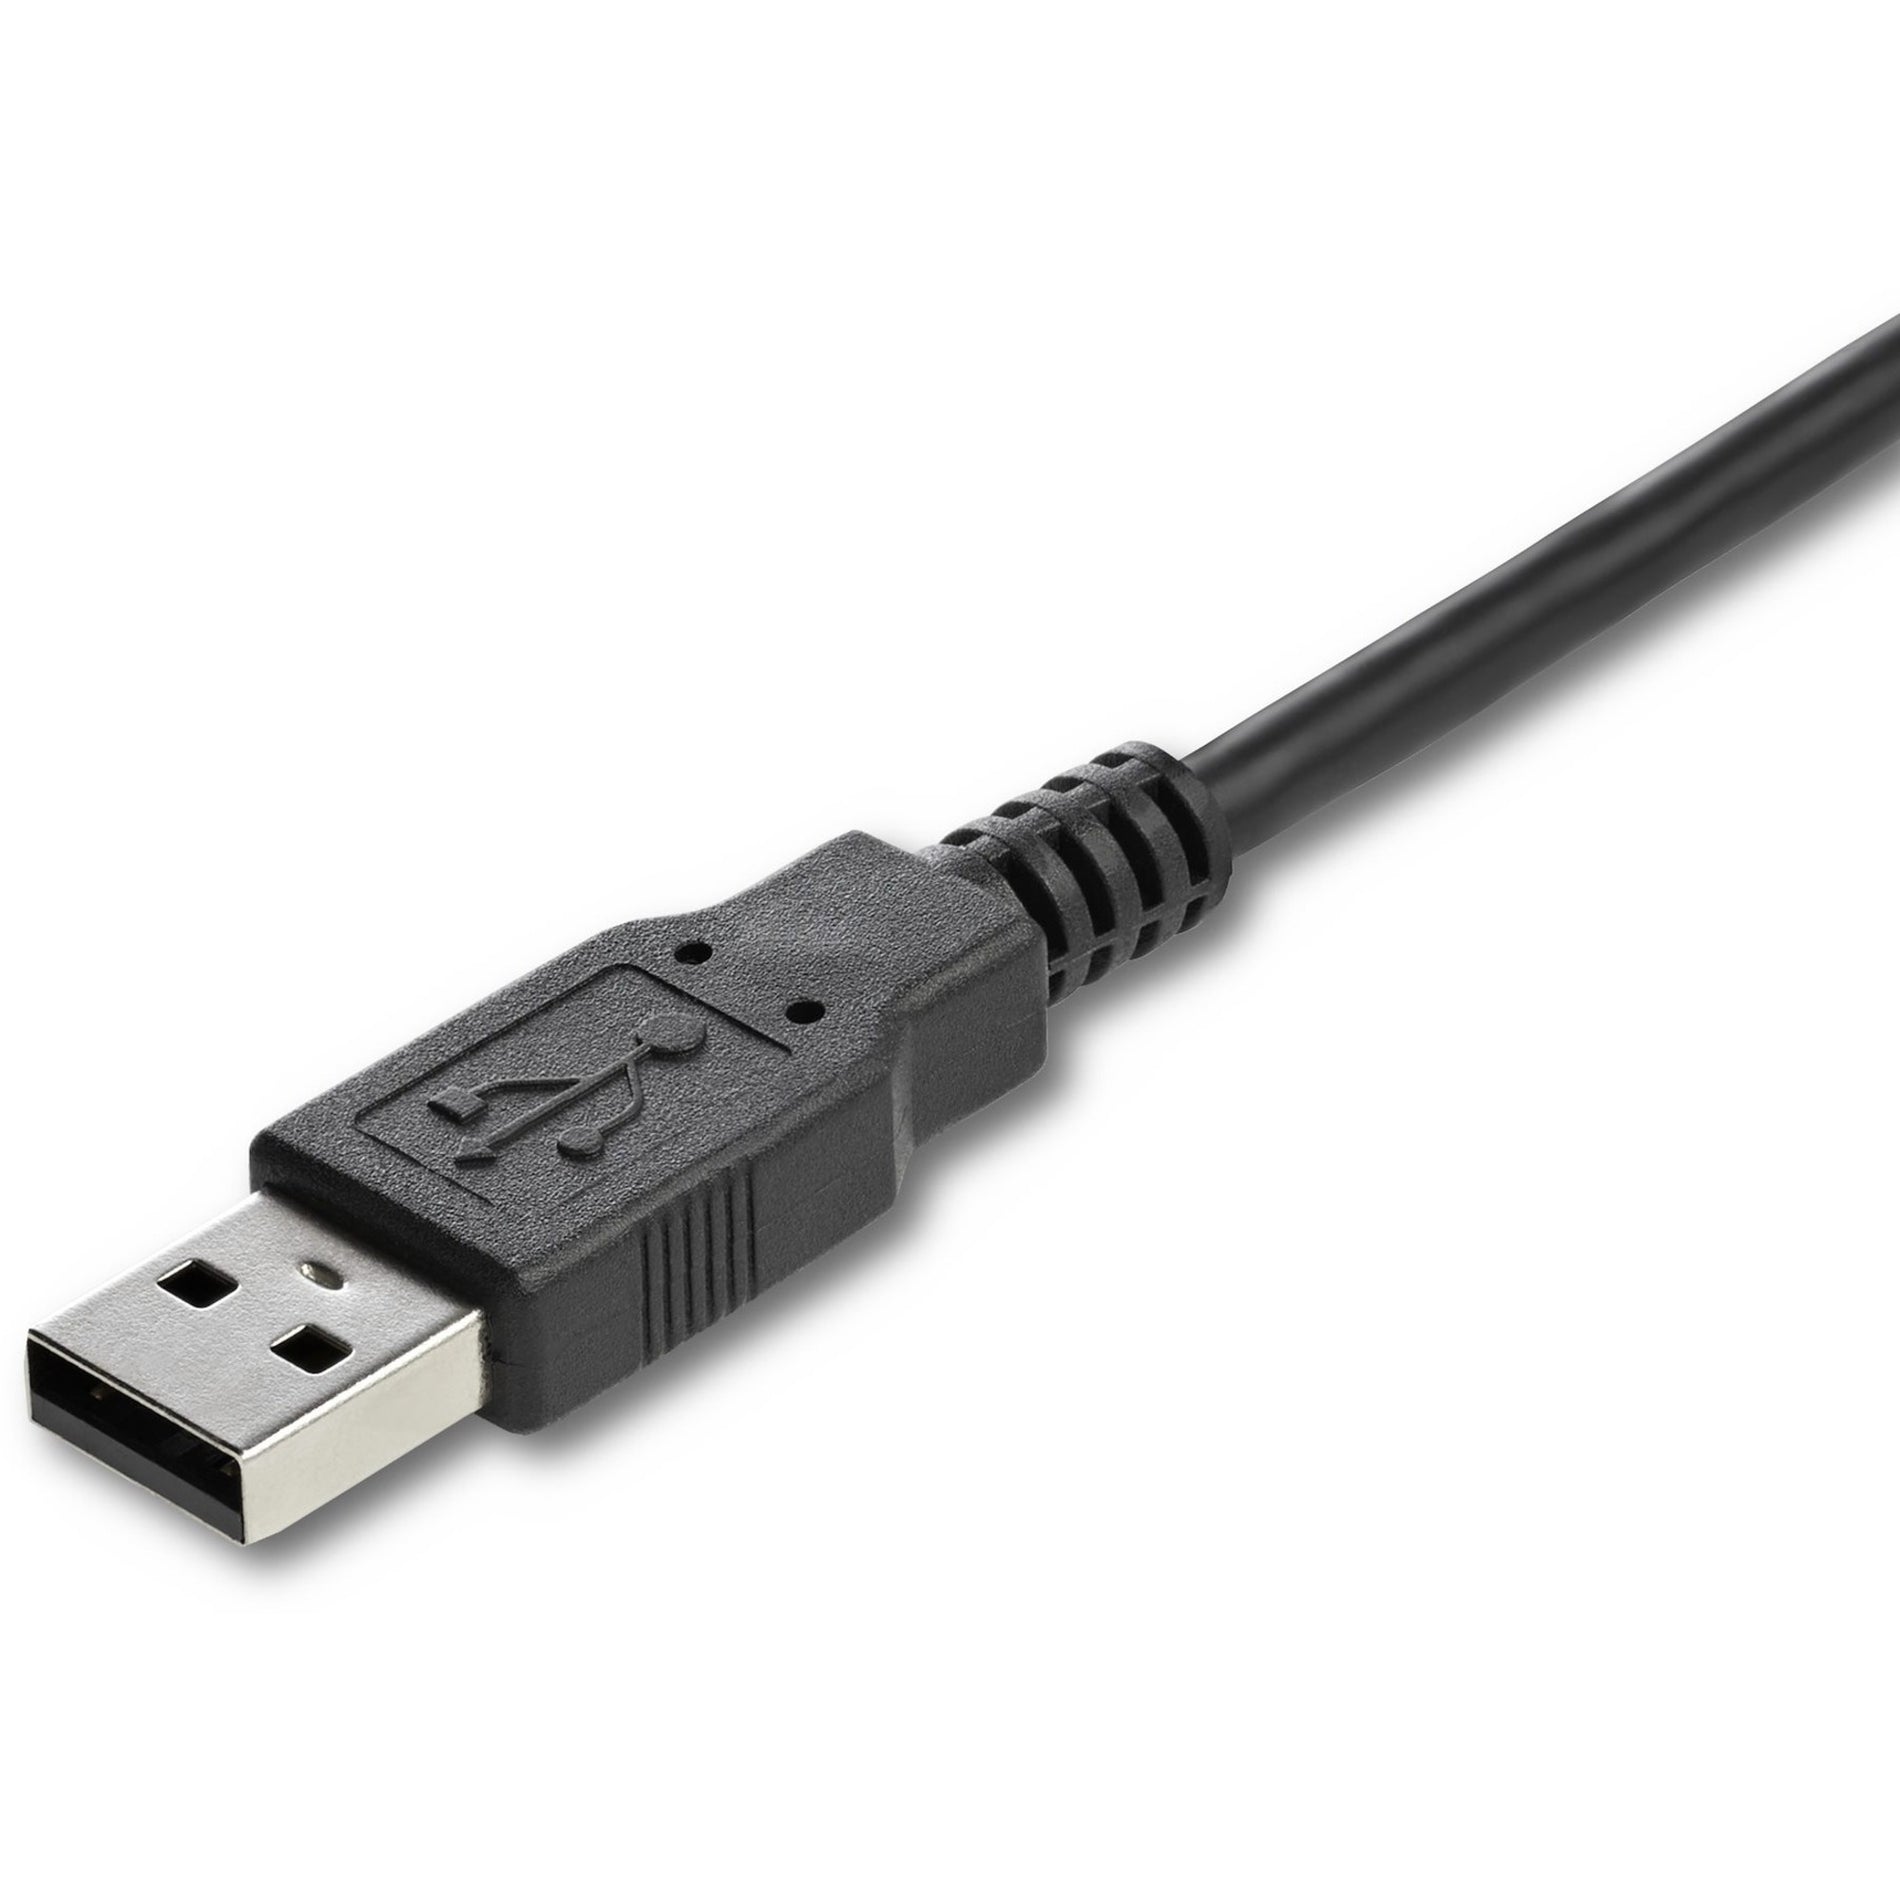 StarTech.com USB2VGAE3 USB to VGA External Video Card Multi Monitor Adapter - 1920x1200, TAA Compliant, 2 Year Warranty